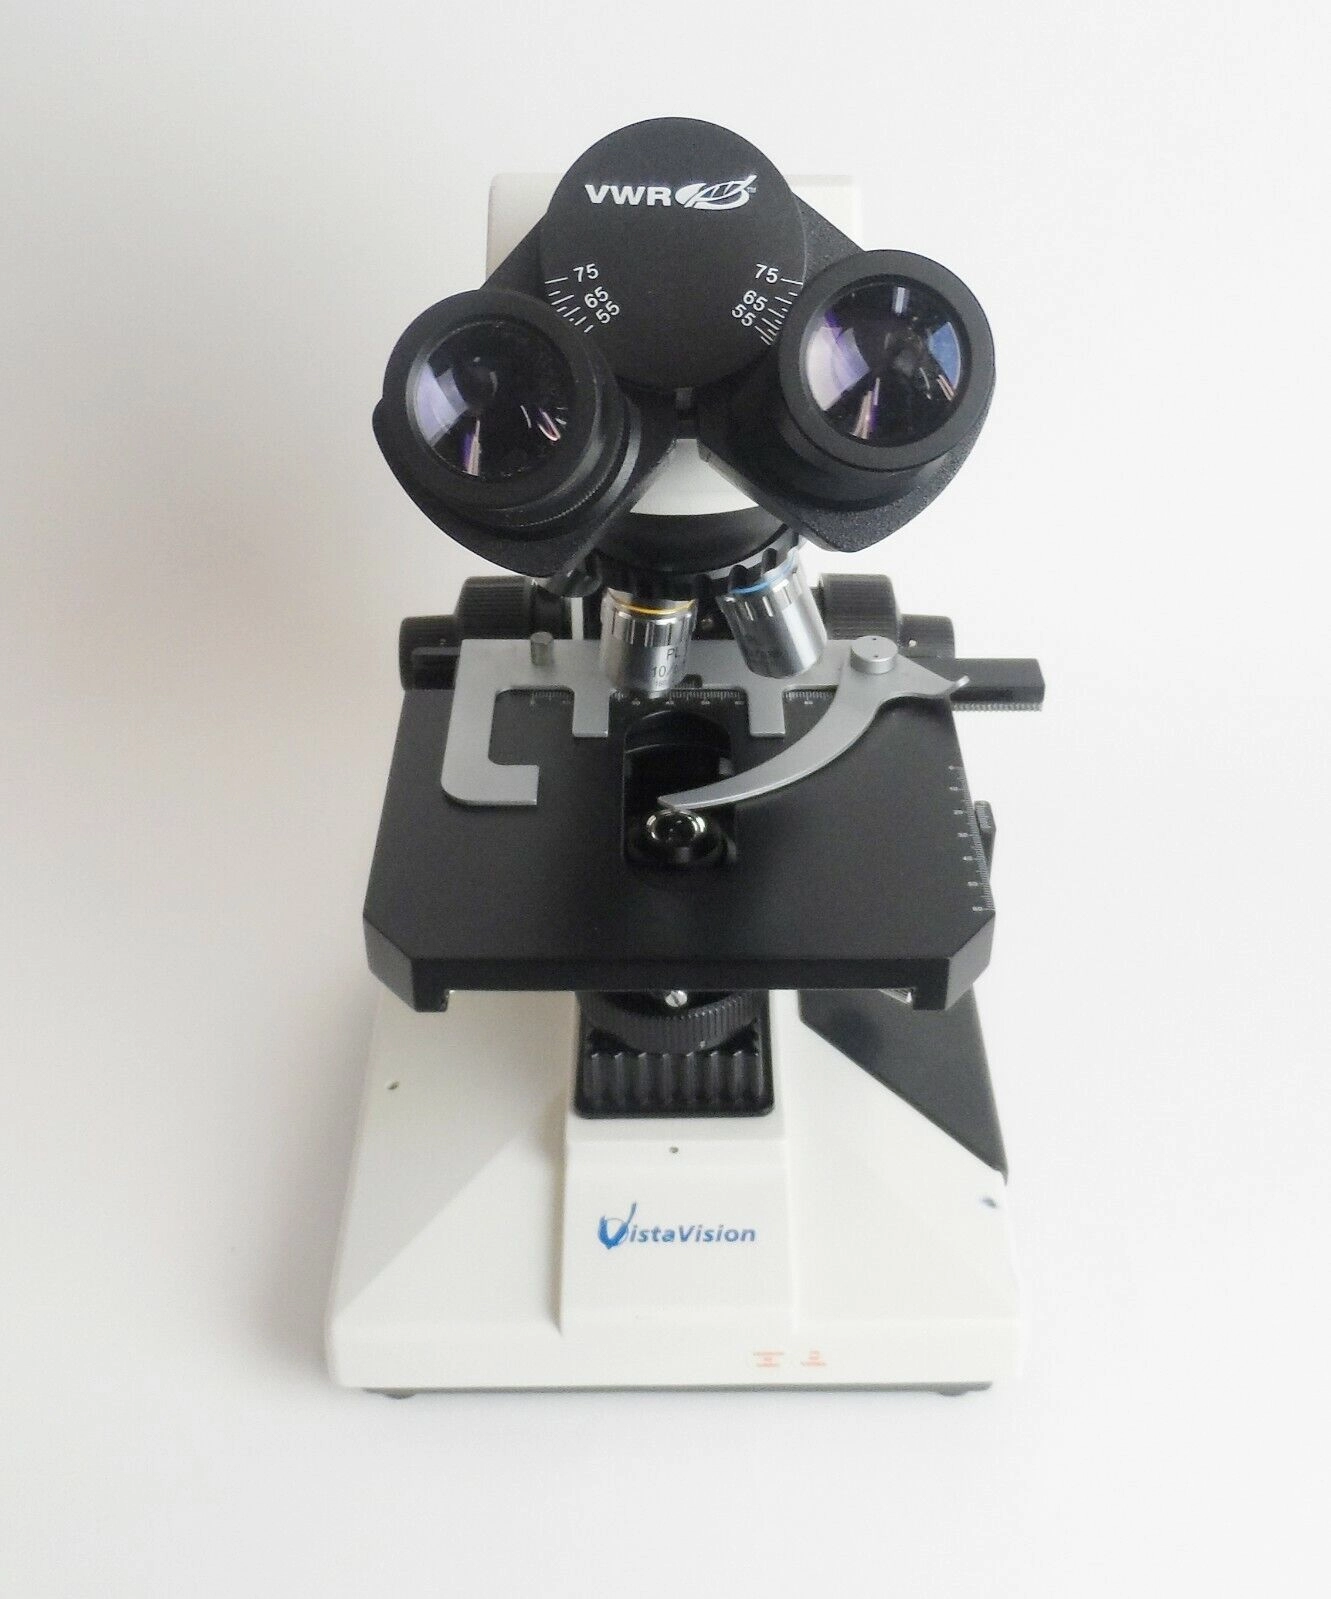 VWR VistaVision Microscope